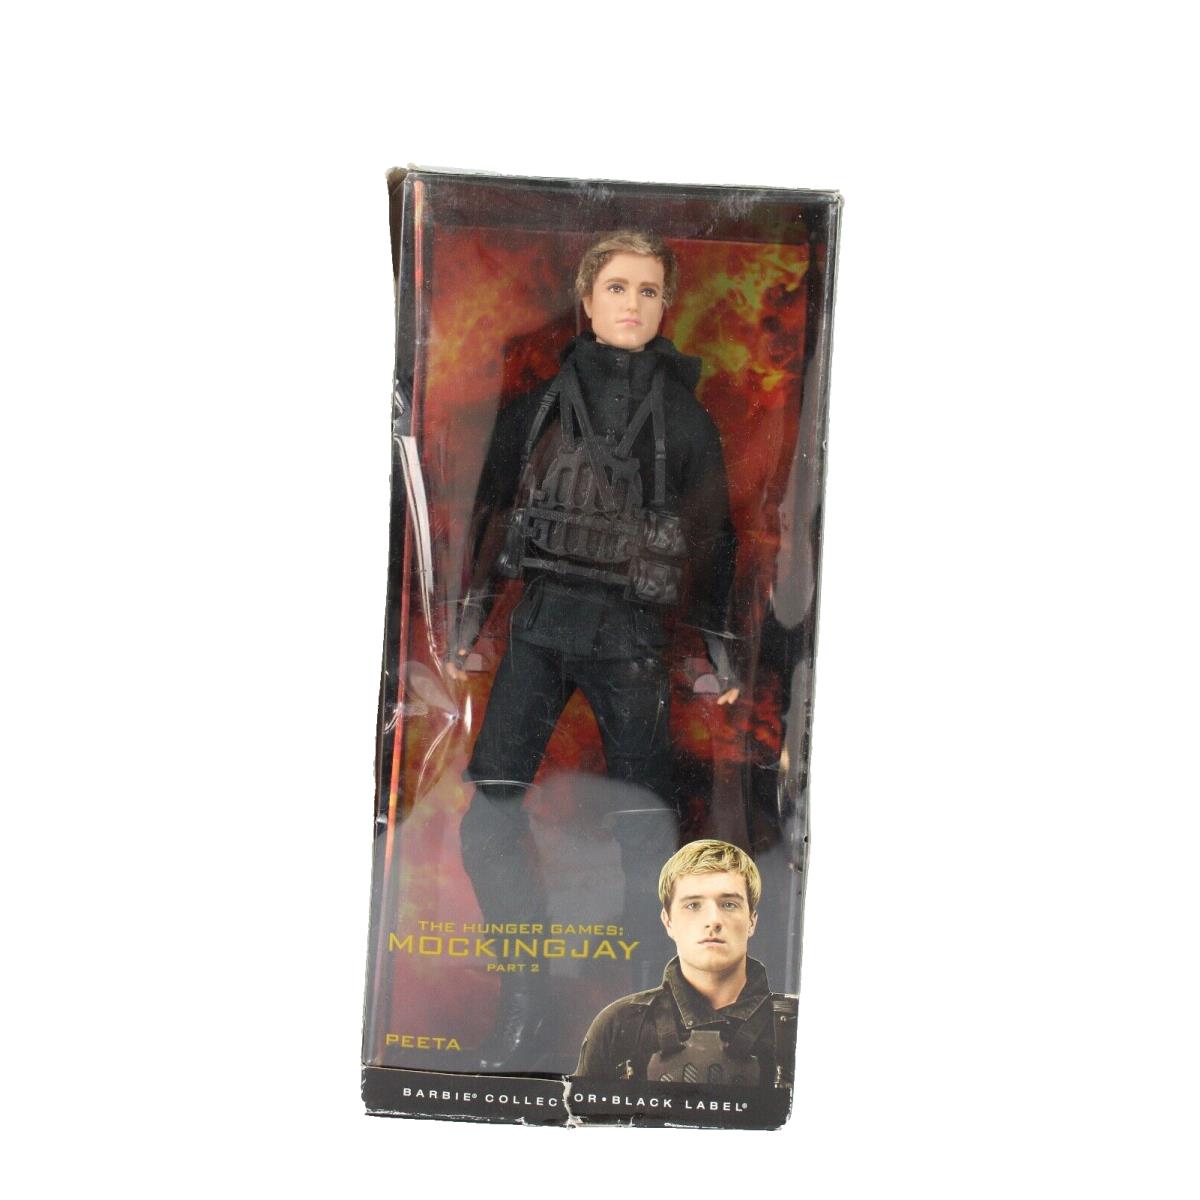 The Hunger Games Mockingjay Part 2 Peeta Doll Barbie Collector Black Label